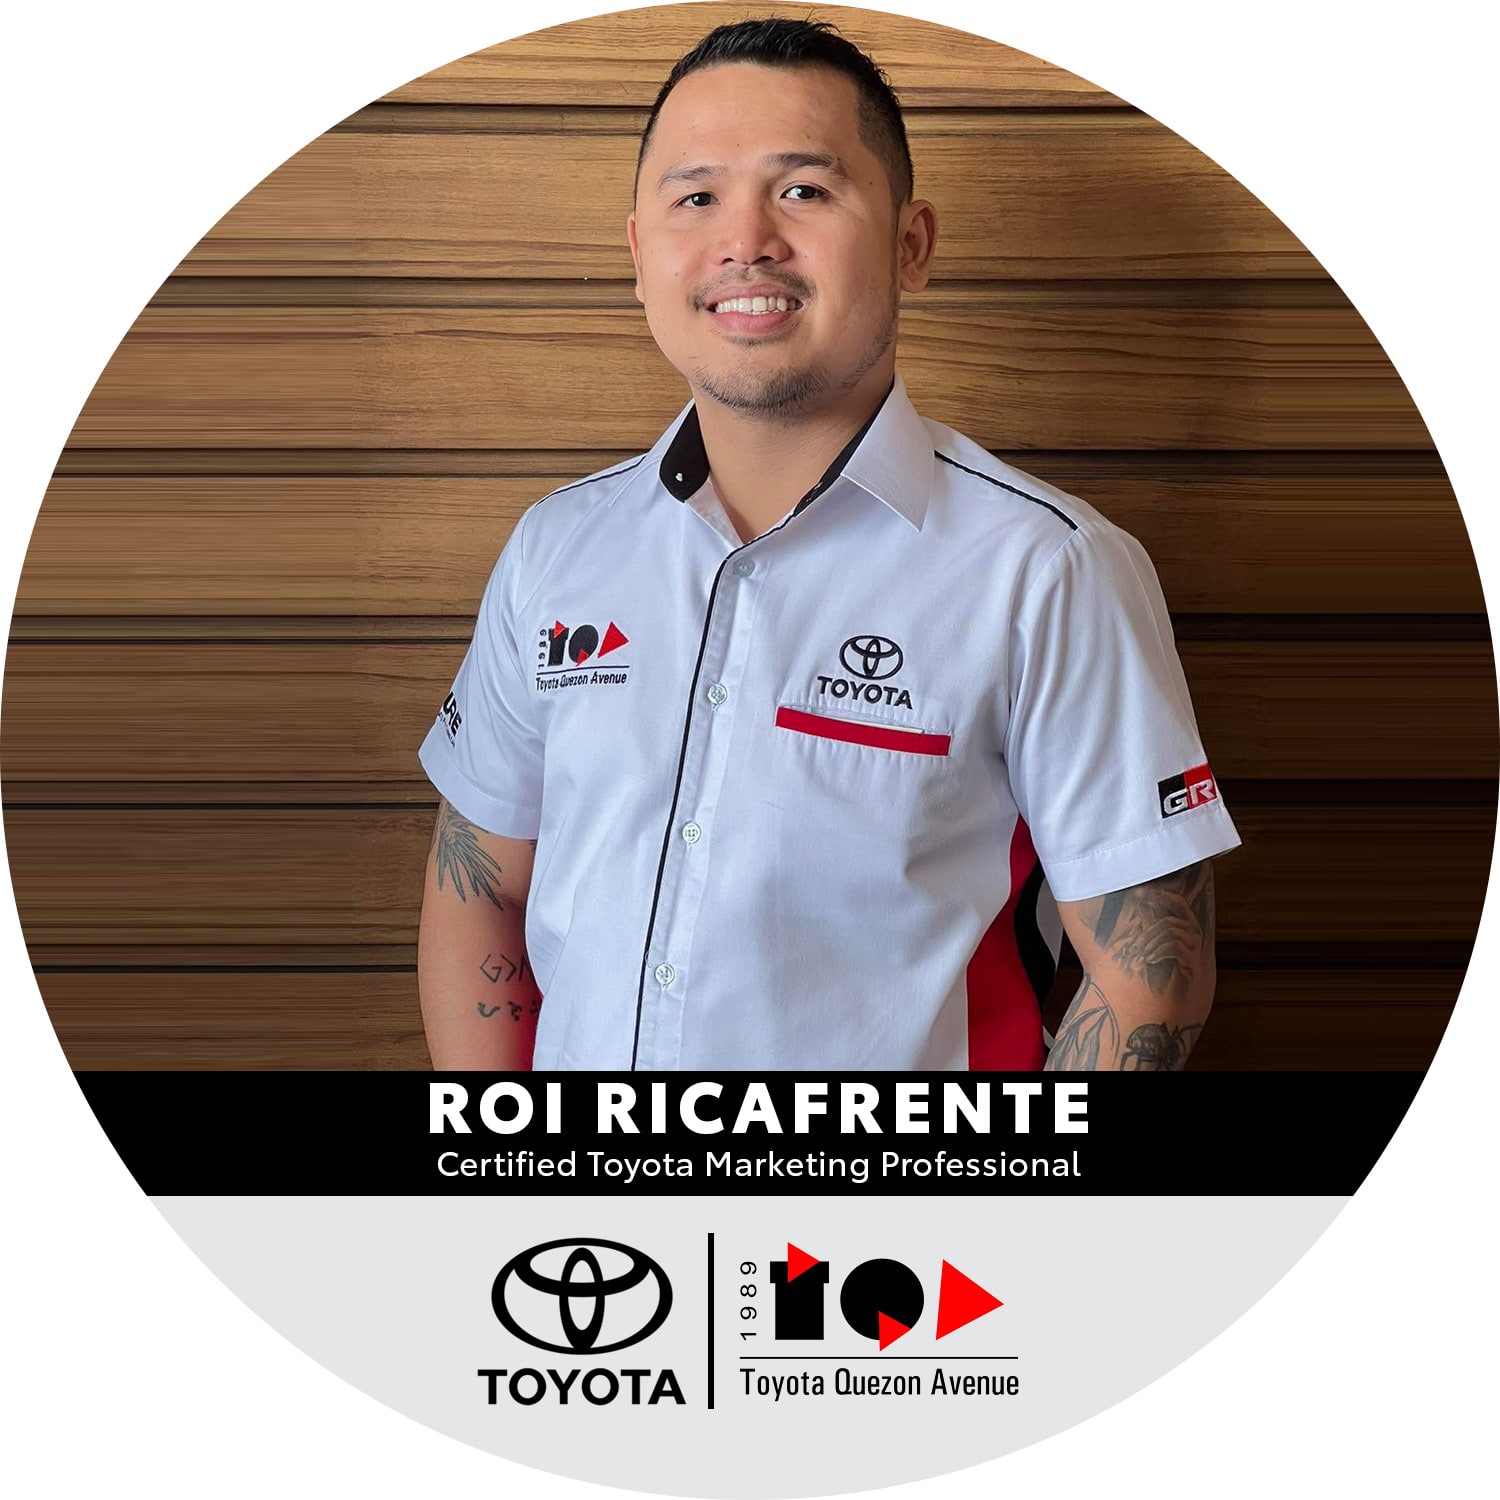 Certified Toyota Marketing Professionals -Roi Ricafrente